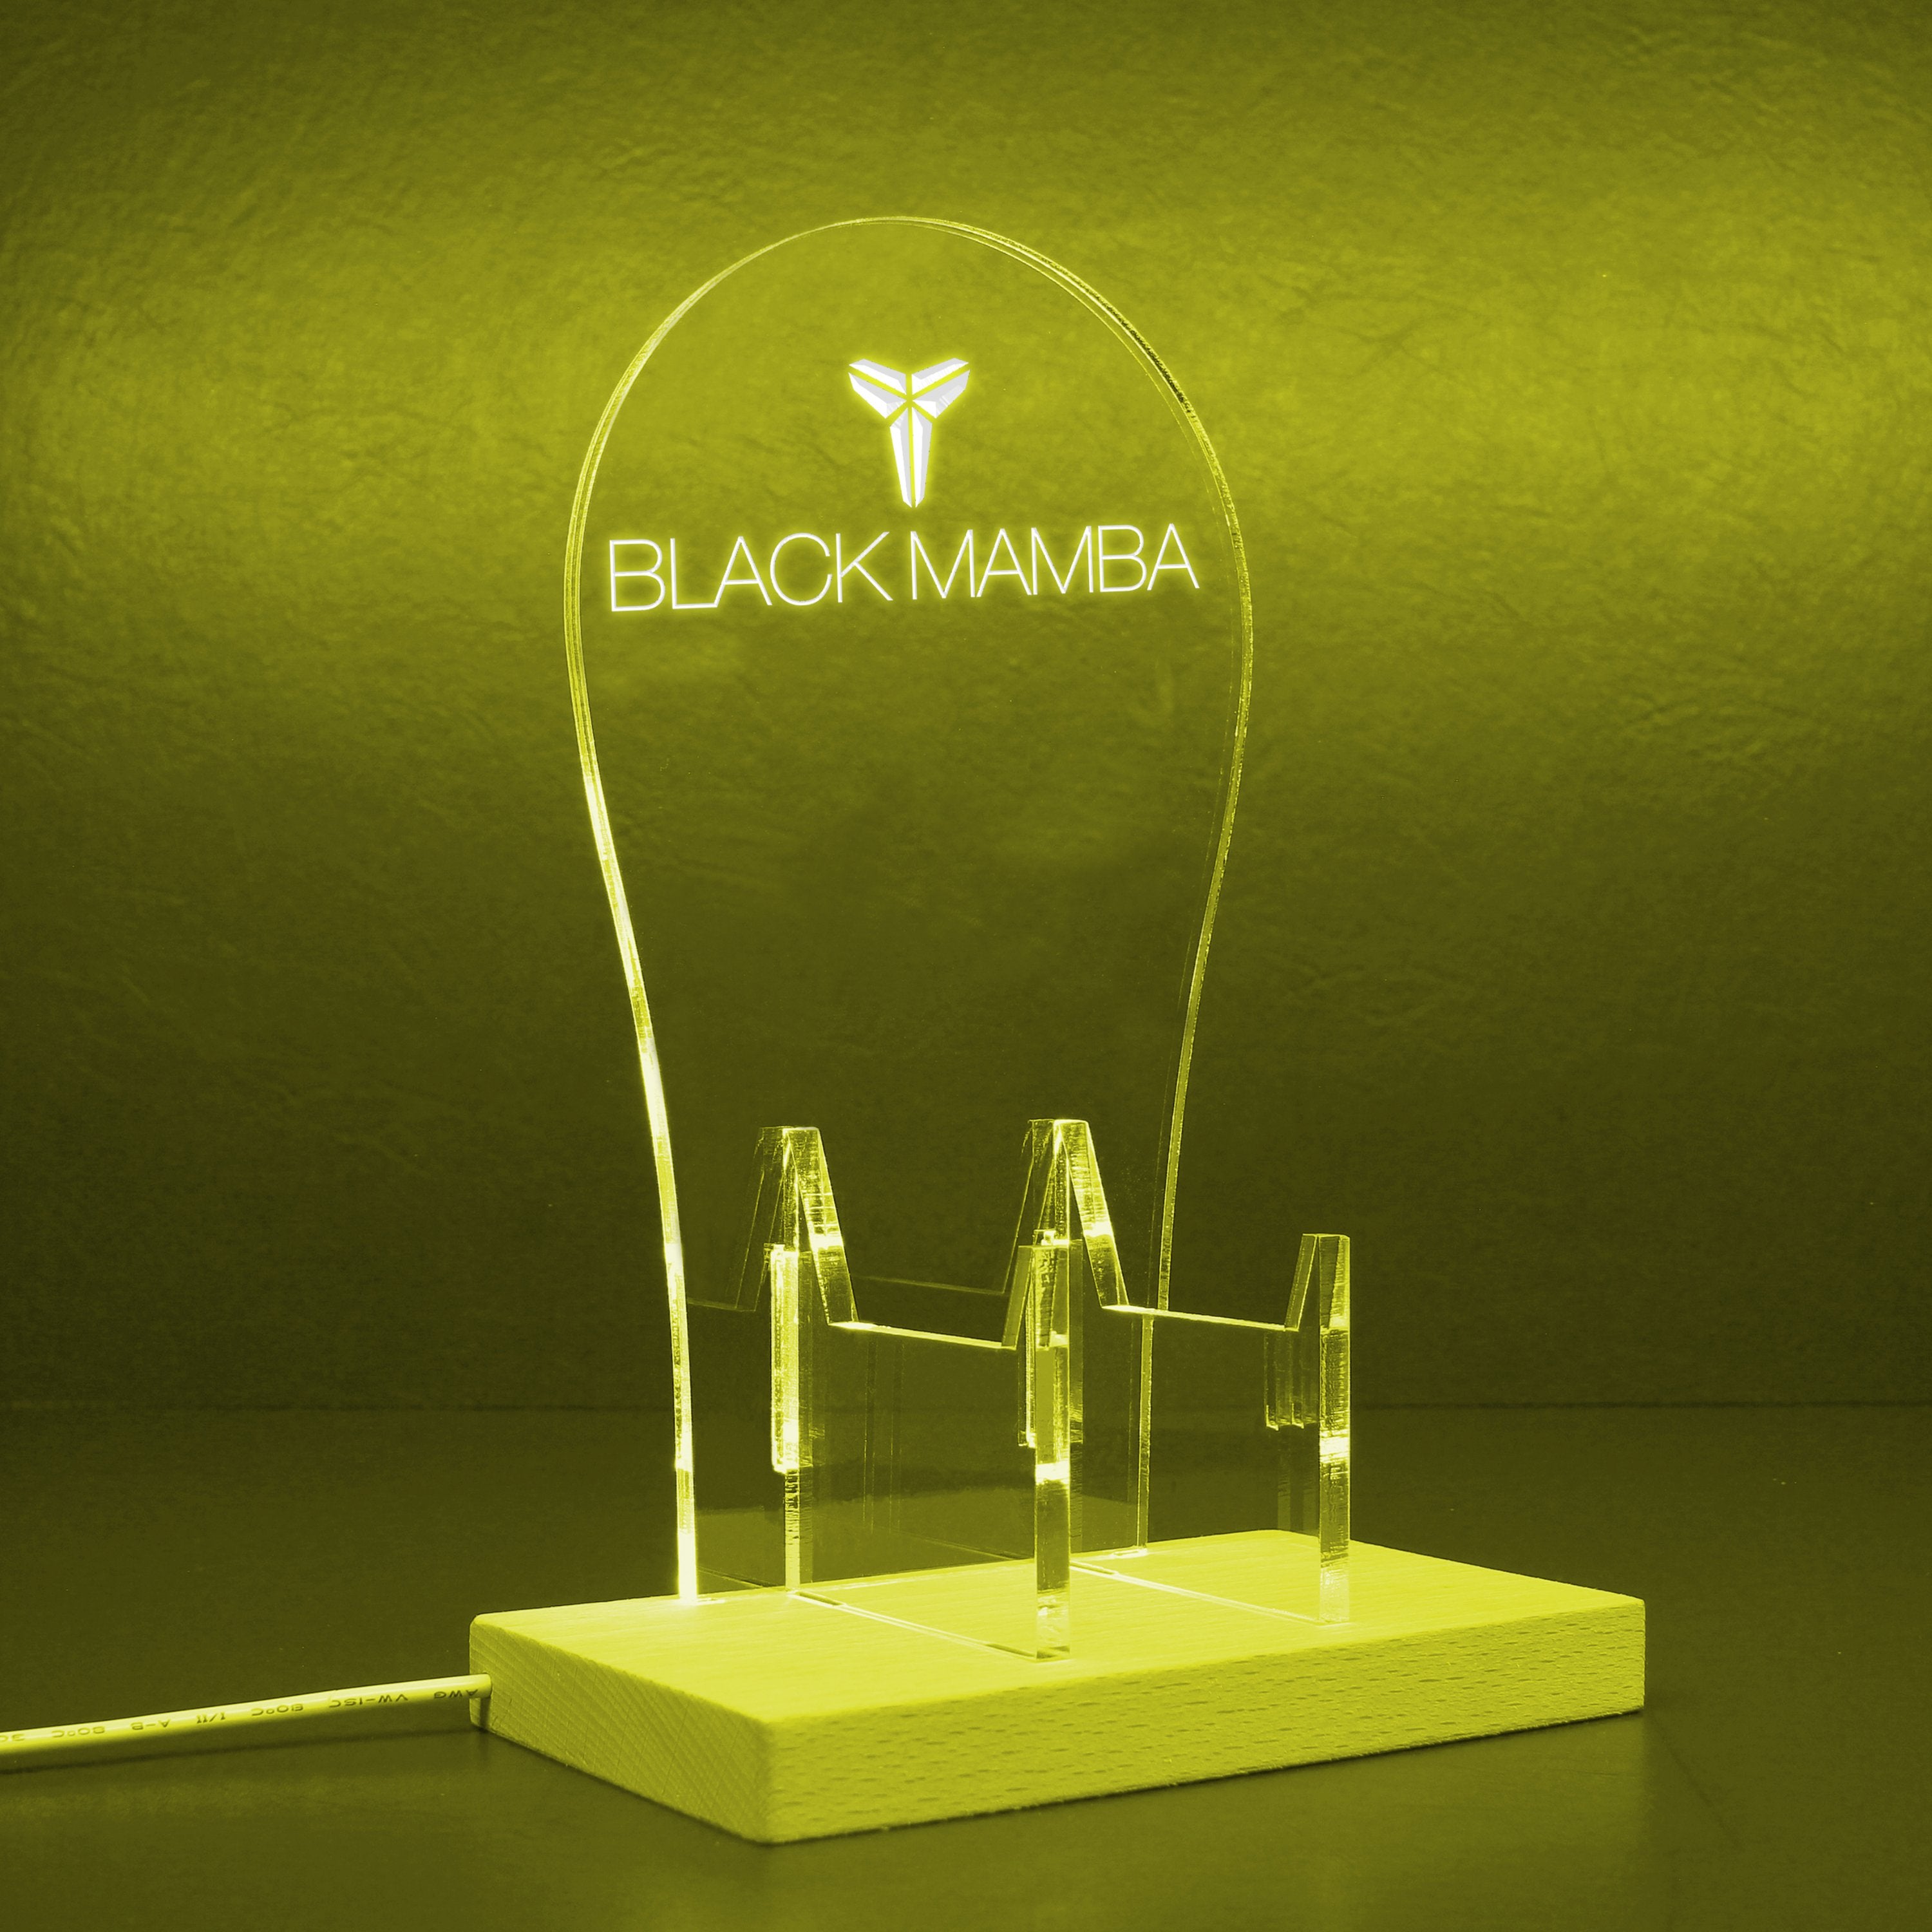 Black-Mamba RGB LED Gaming Headset Controller Stand